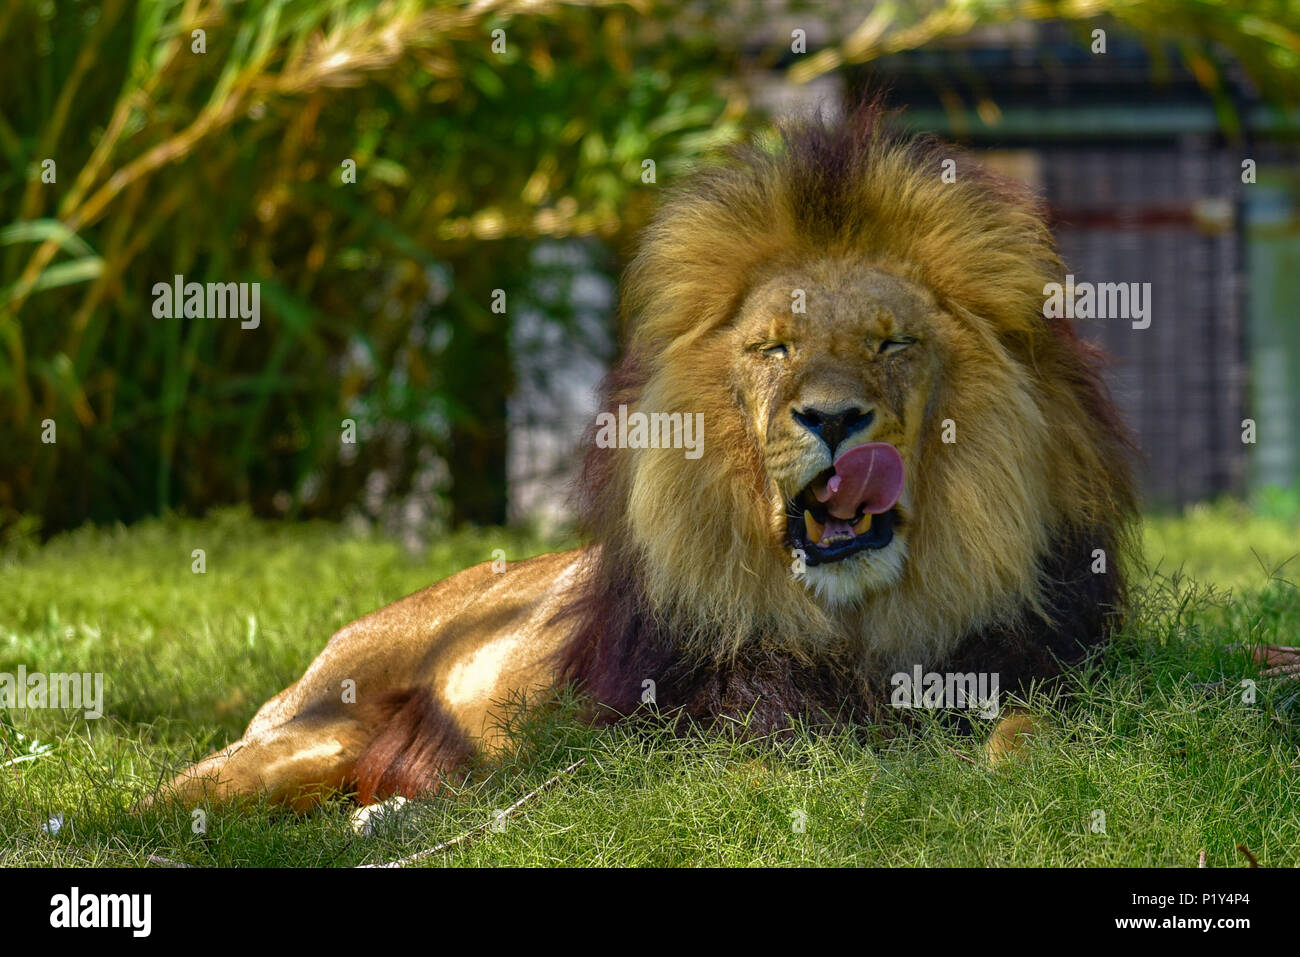 Lion the wildlife on grass Stock Photo